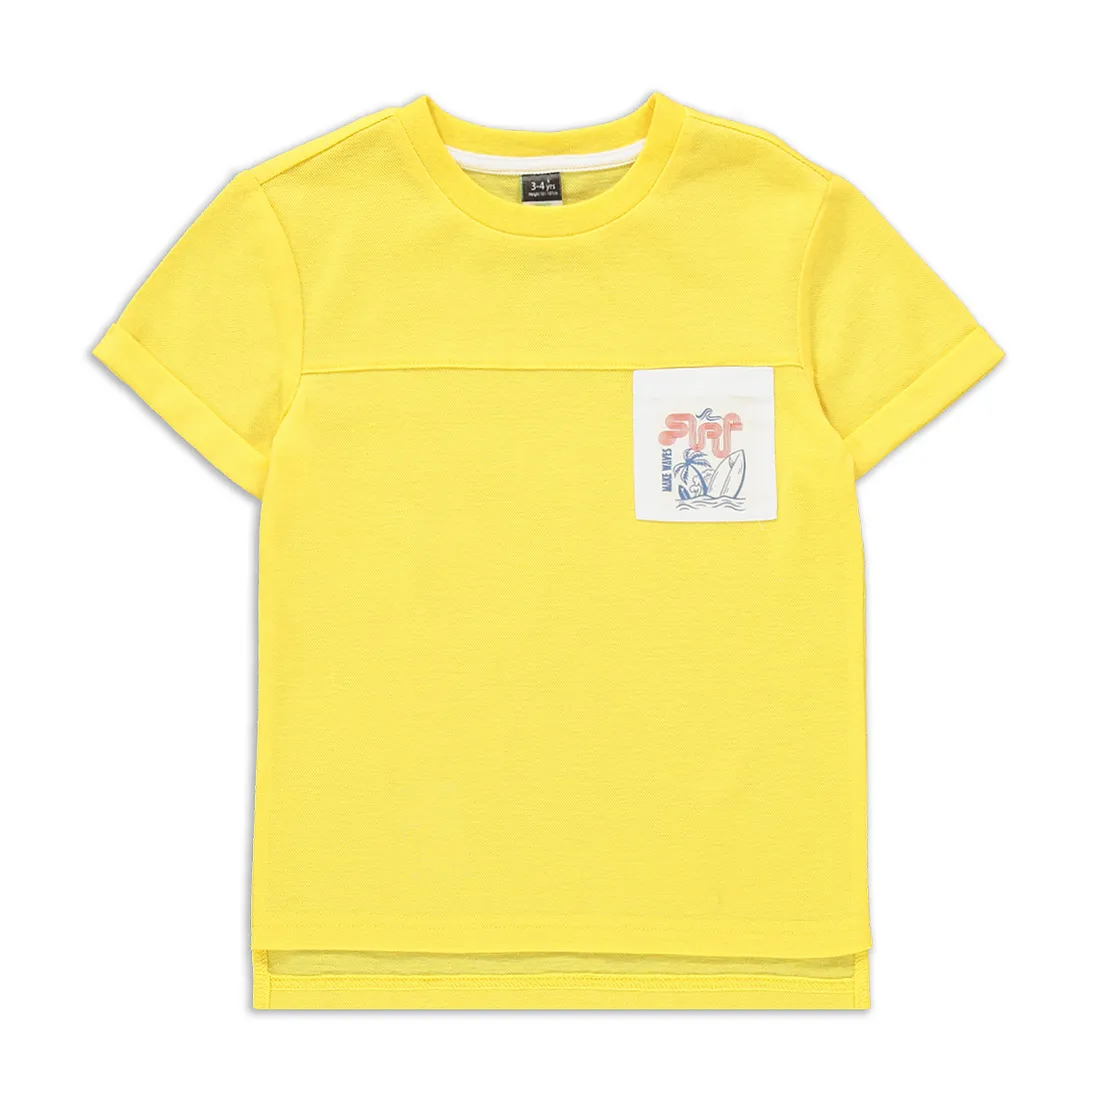 Pocket short sleeve t-shirt yellow - BOYS 2-8 YEARS Tops & T-Shirts ...